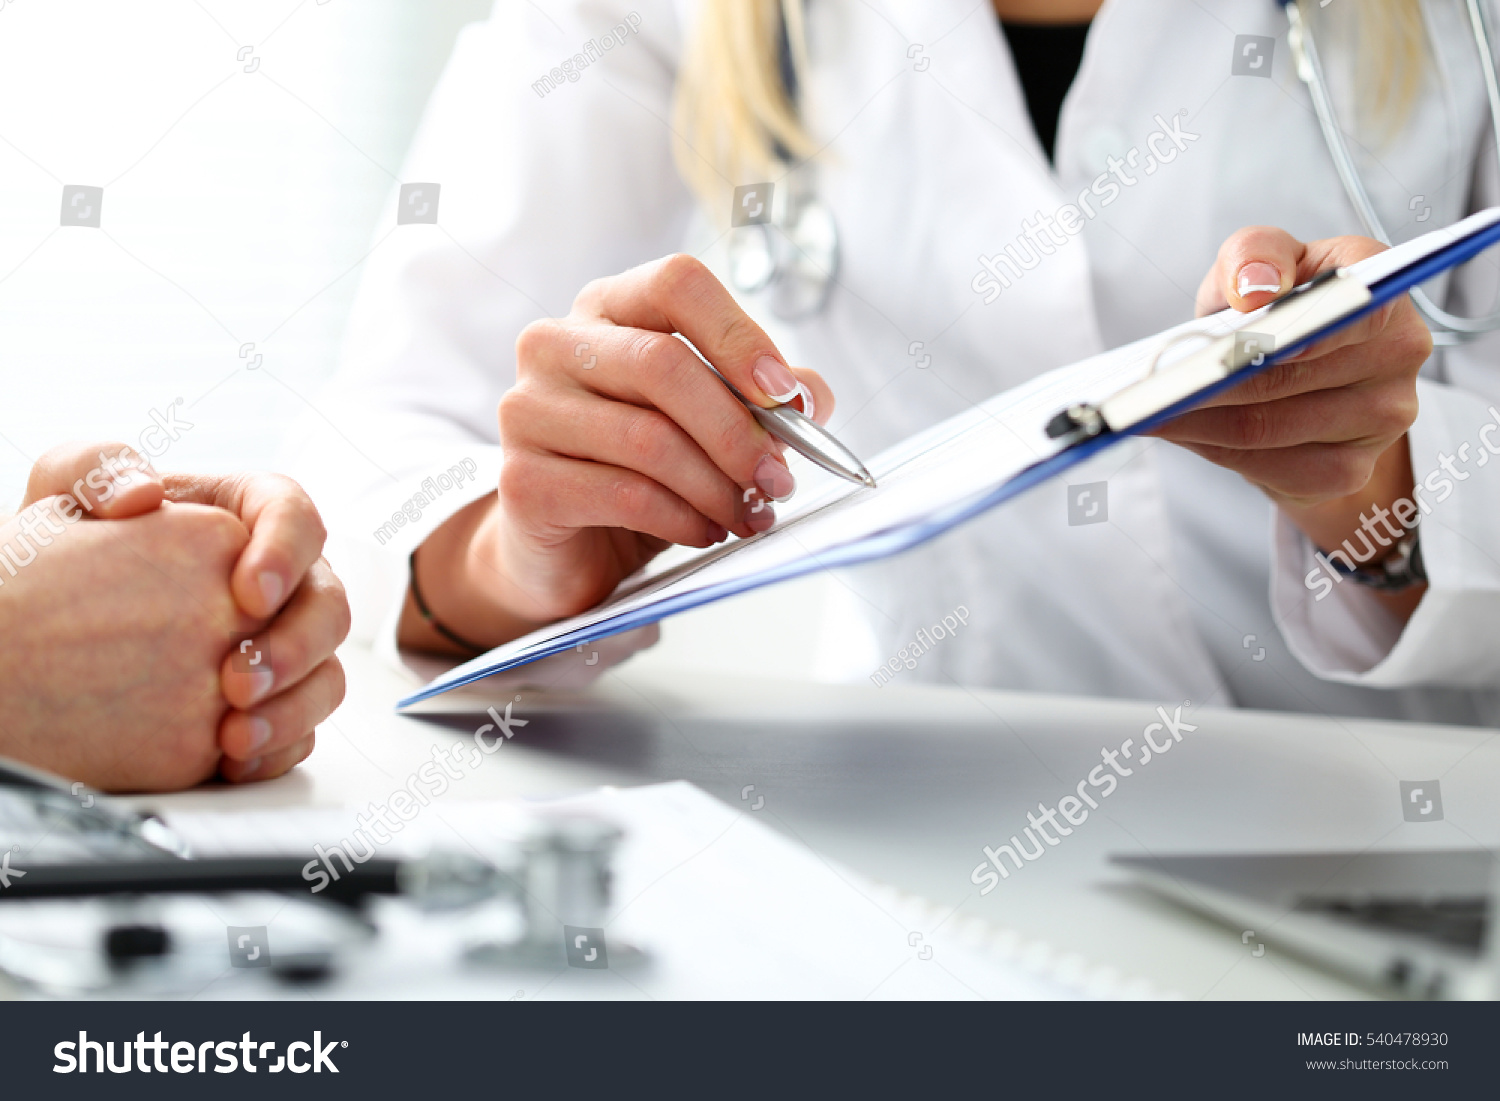 Female Doctor Hand Hold Silver Pen Stock Photo 540478930 - Shutterstock-8671